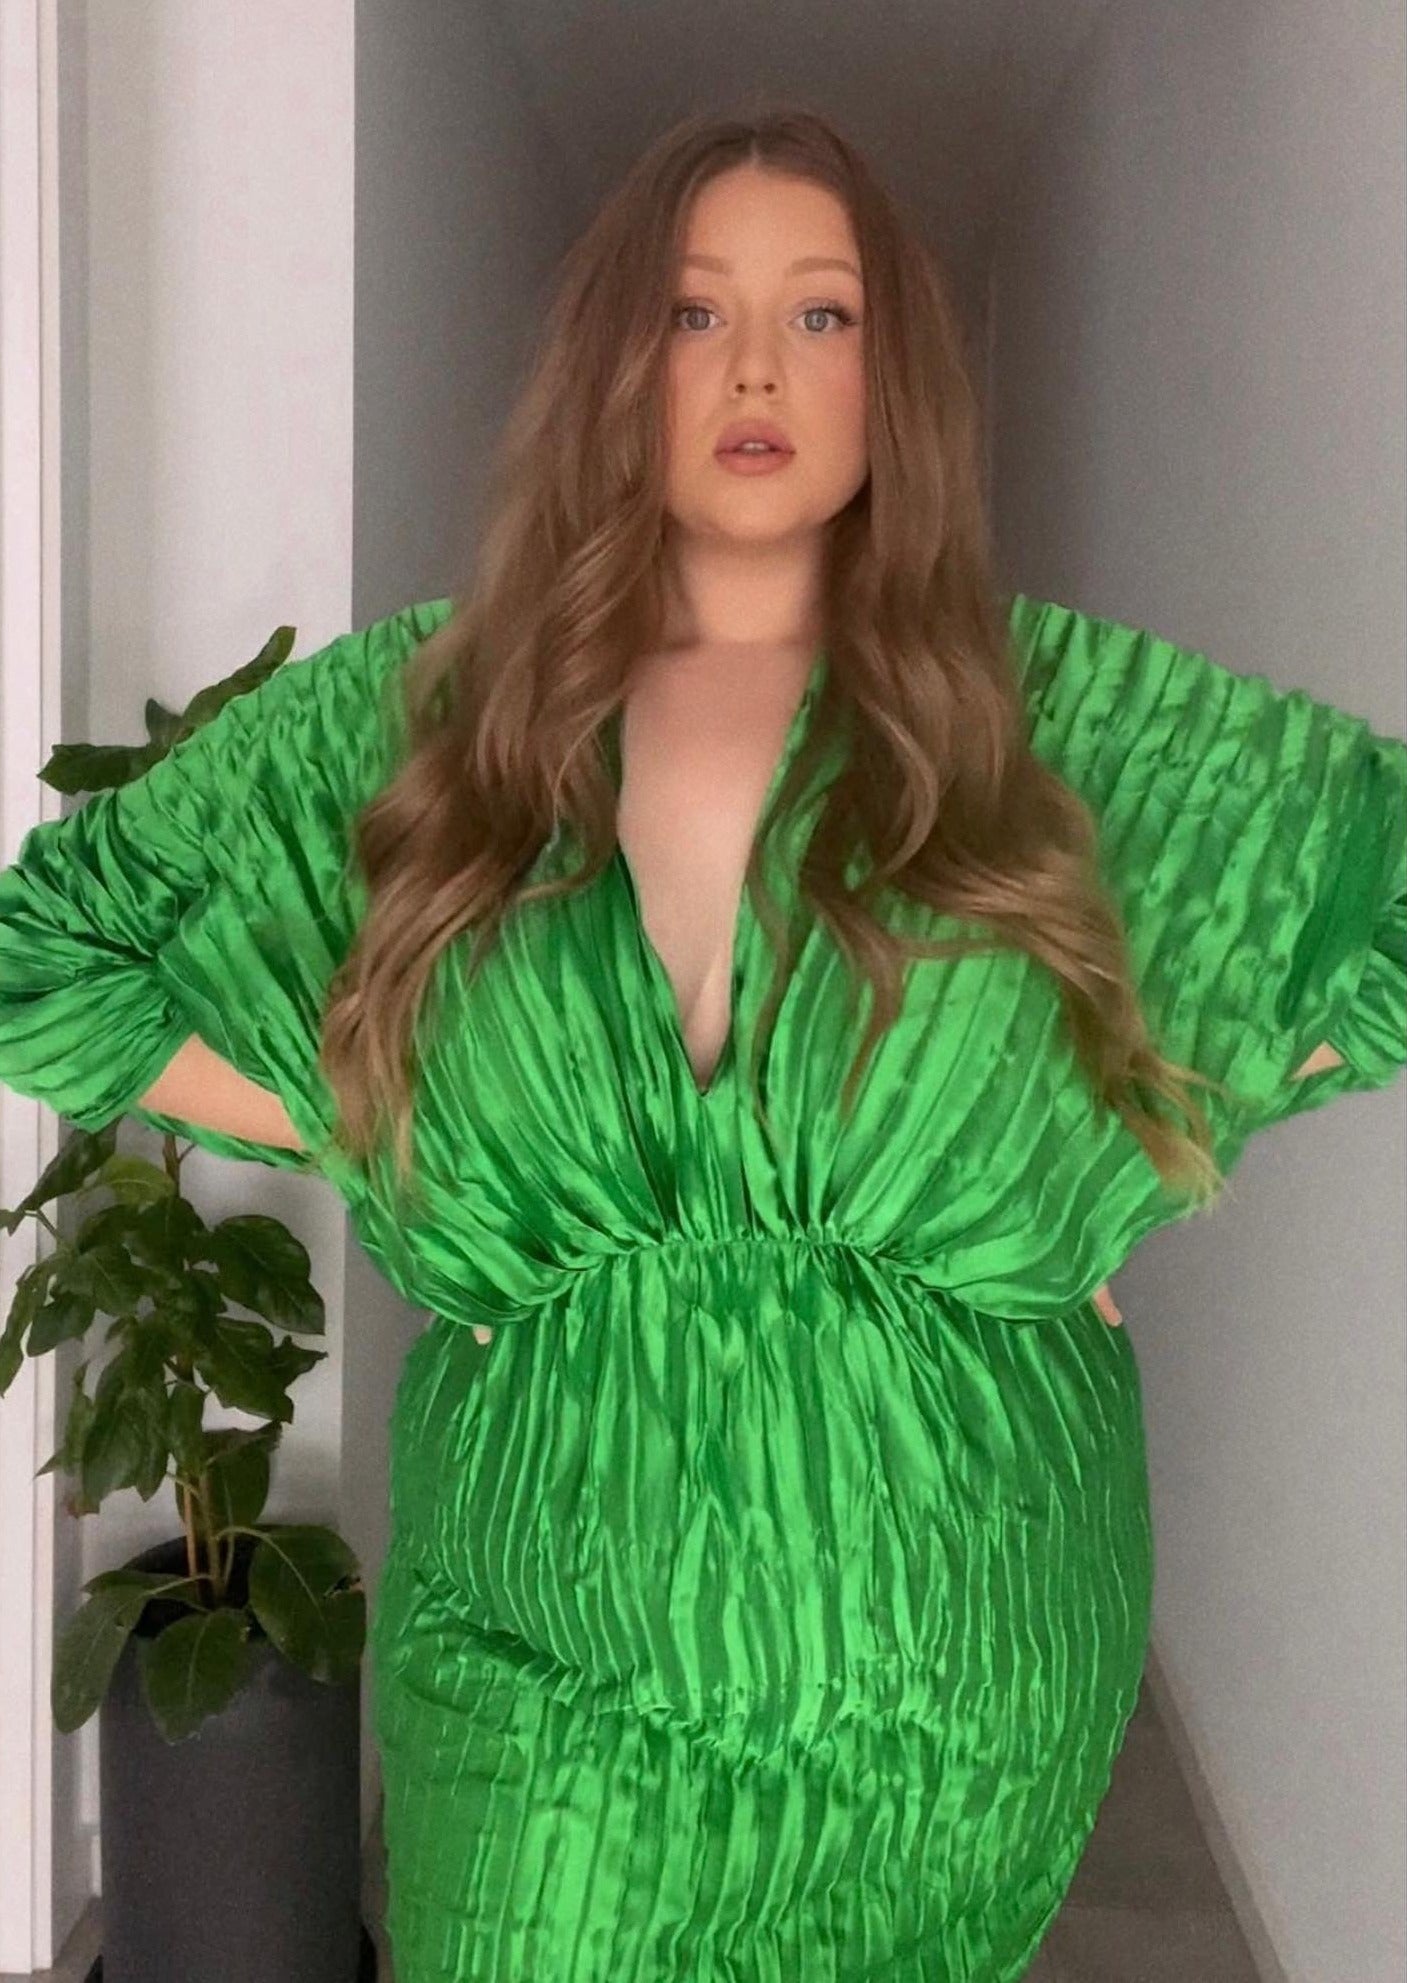 De Luxe Gown - Bright Green